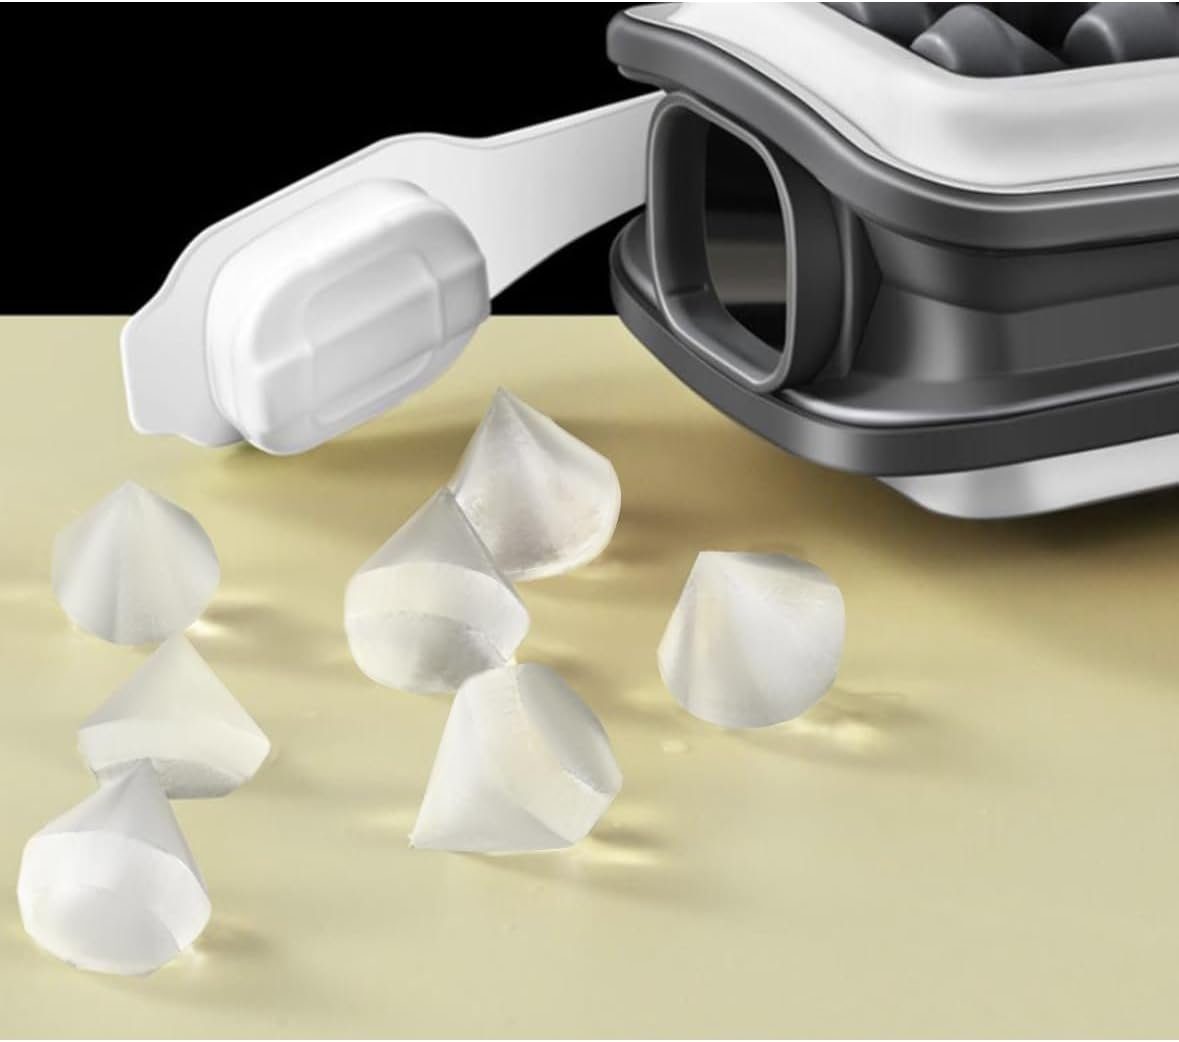 18 Silikon Gefrierschrank Eiswürfelform diamantförmige Eiswürfelbehälter Ruhhy Eiswürfel